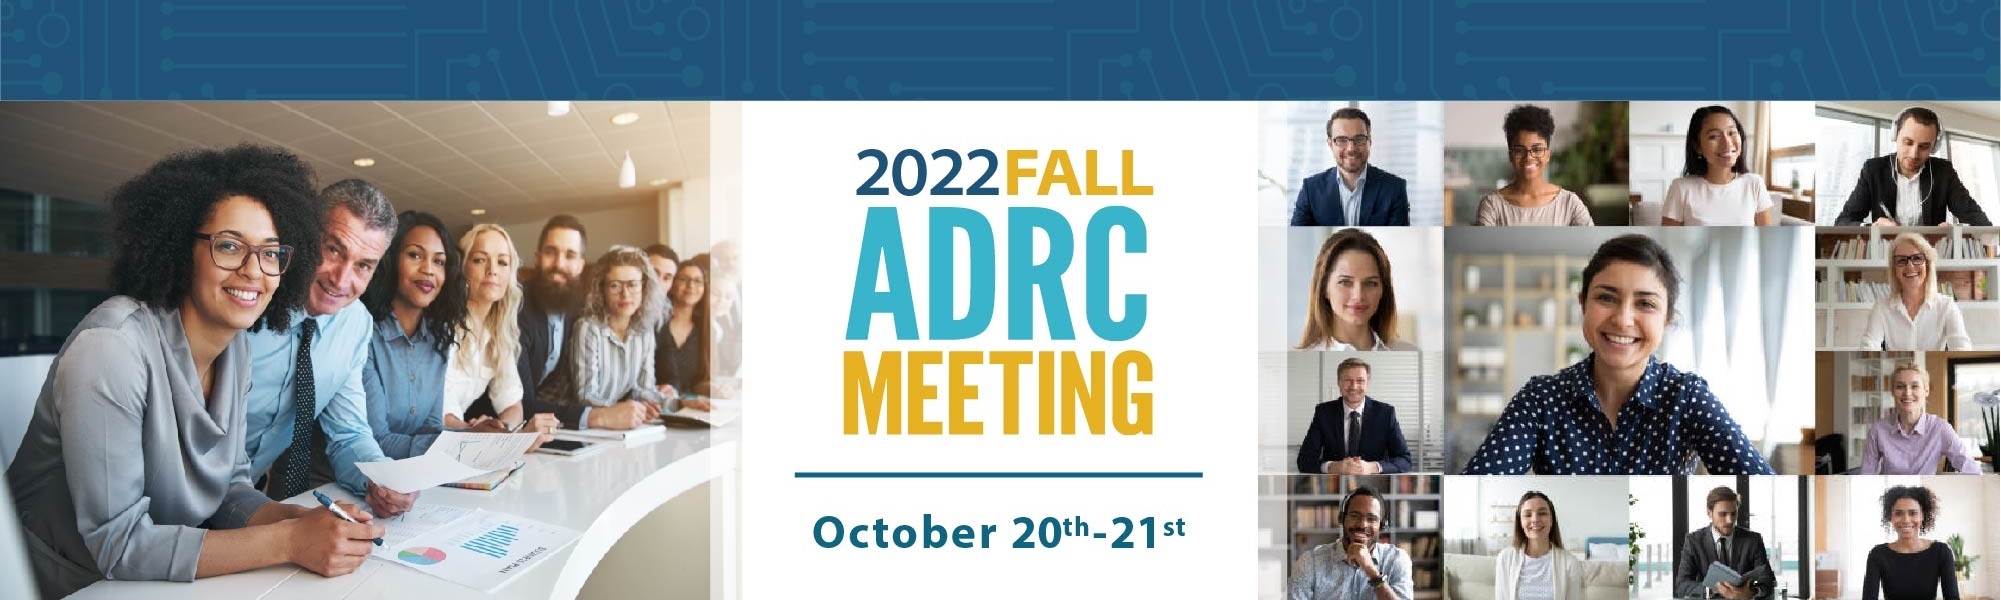 Fall ADRC Meeting Oct 20 - 21, 2022